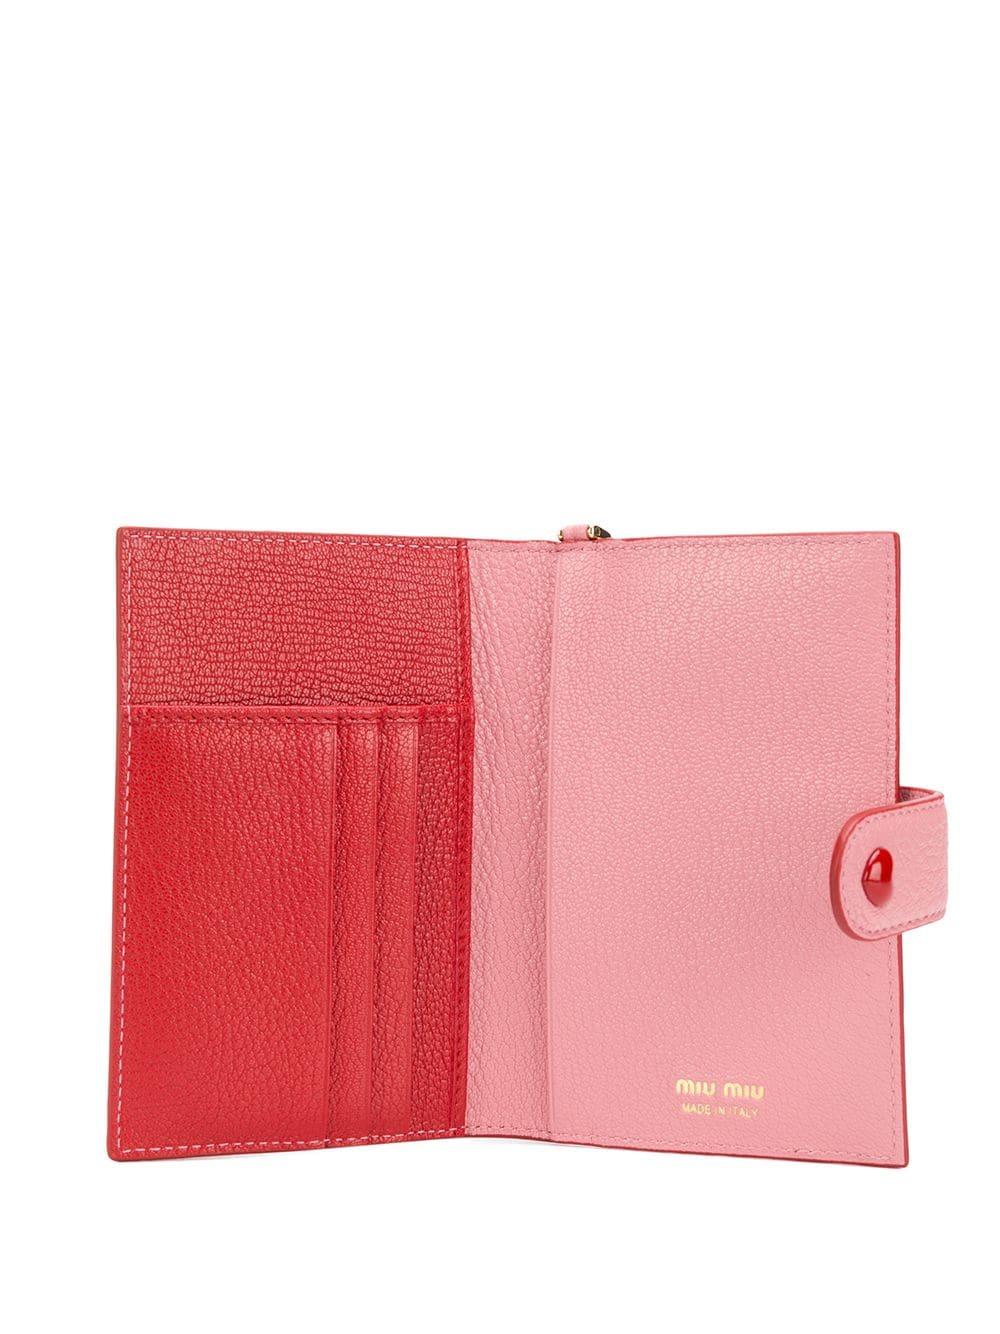 Miu Miu Leather Madras Love Wallet in Pink - Lyst